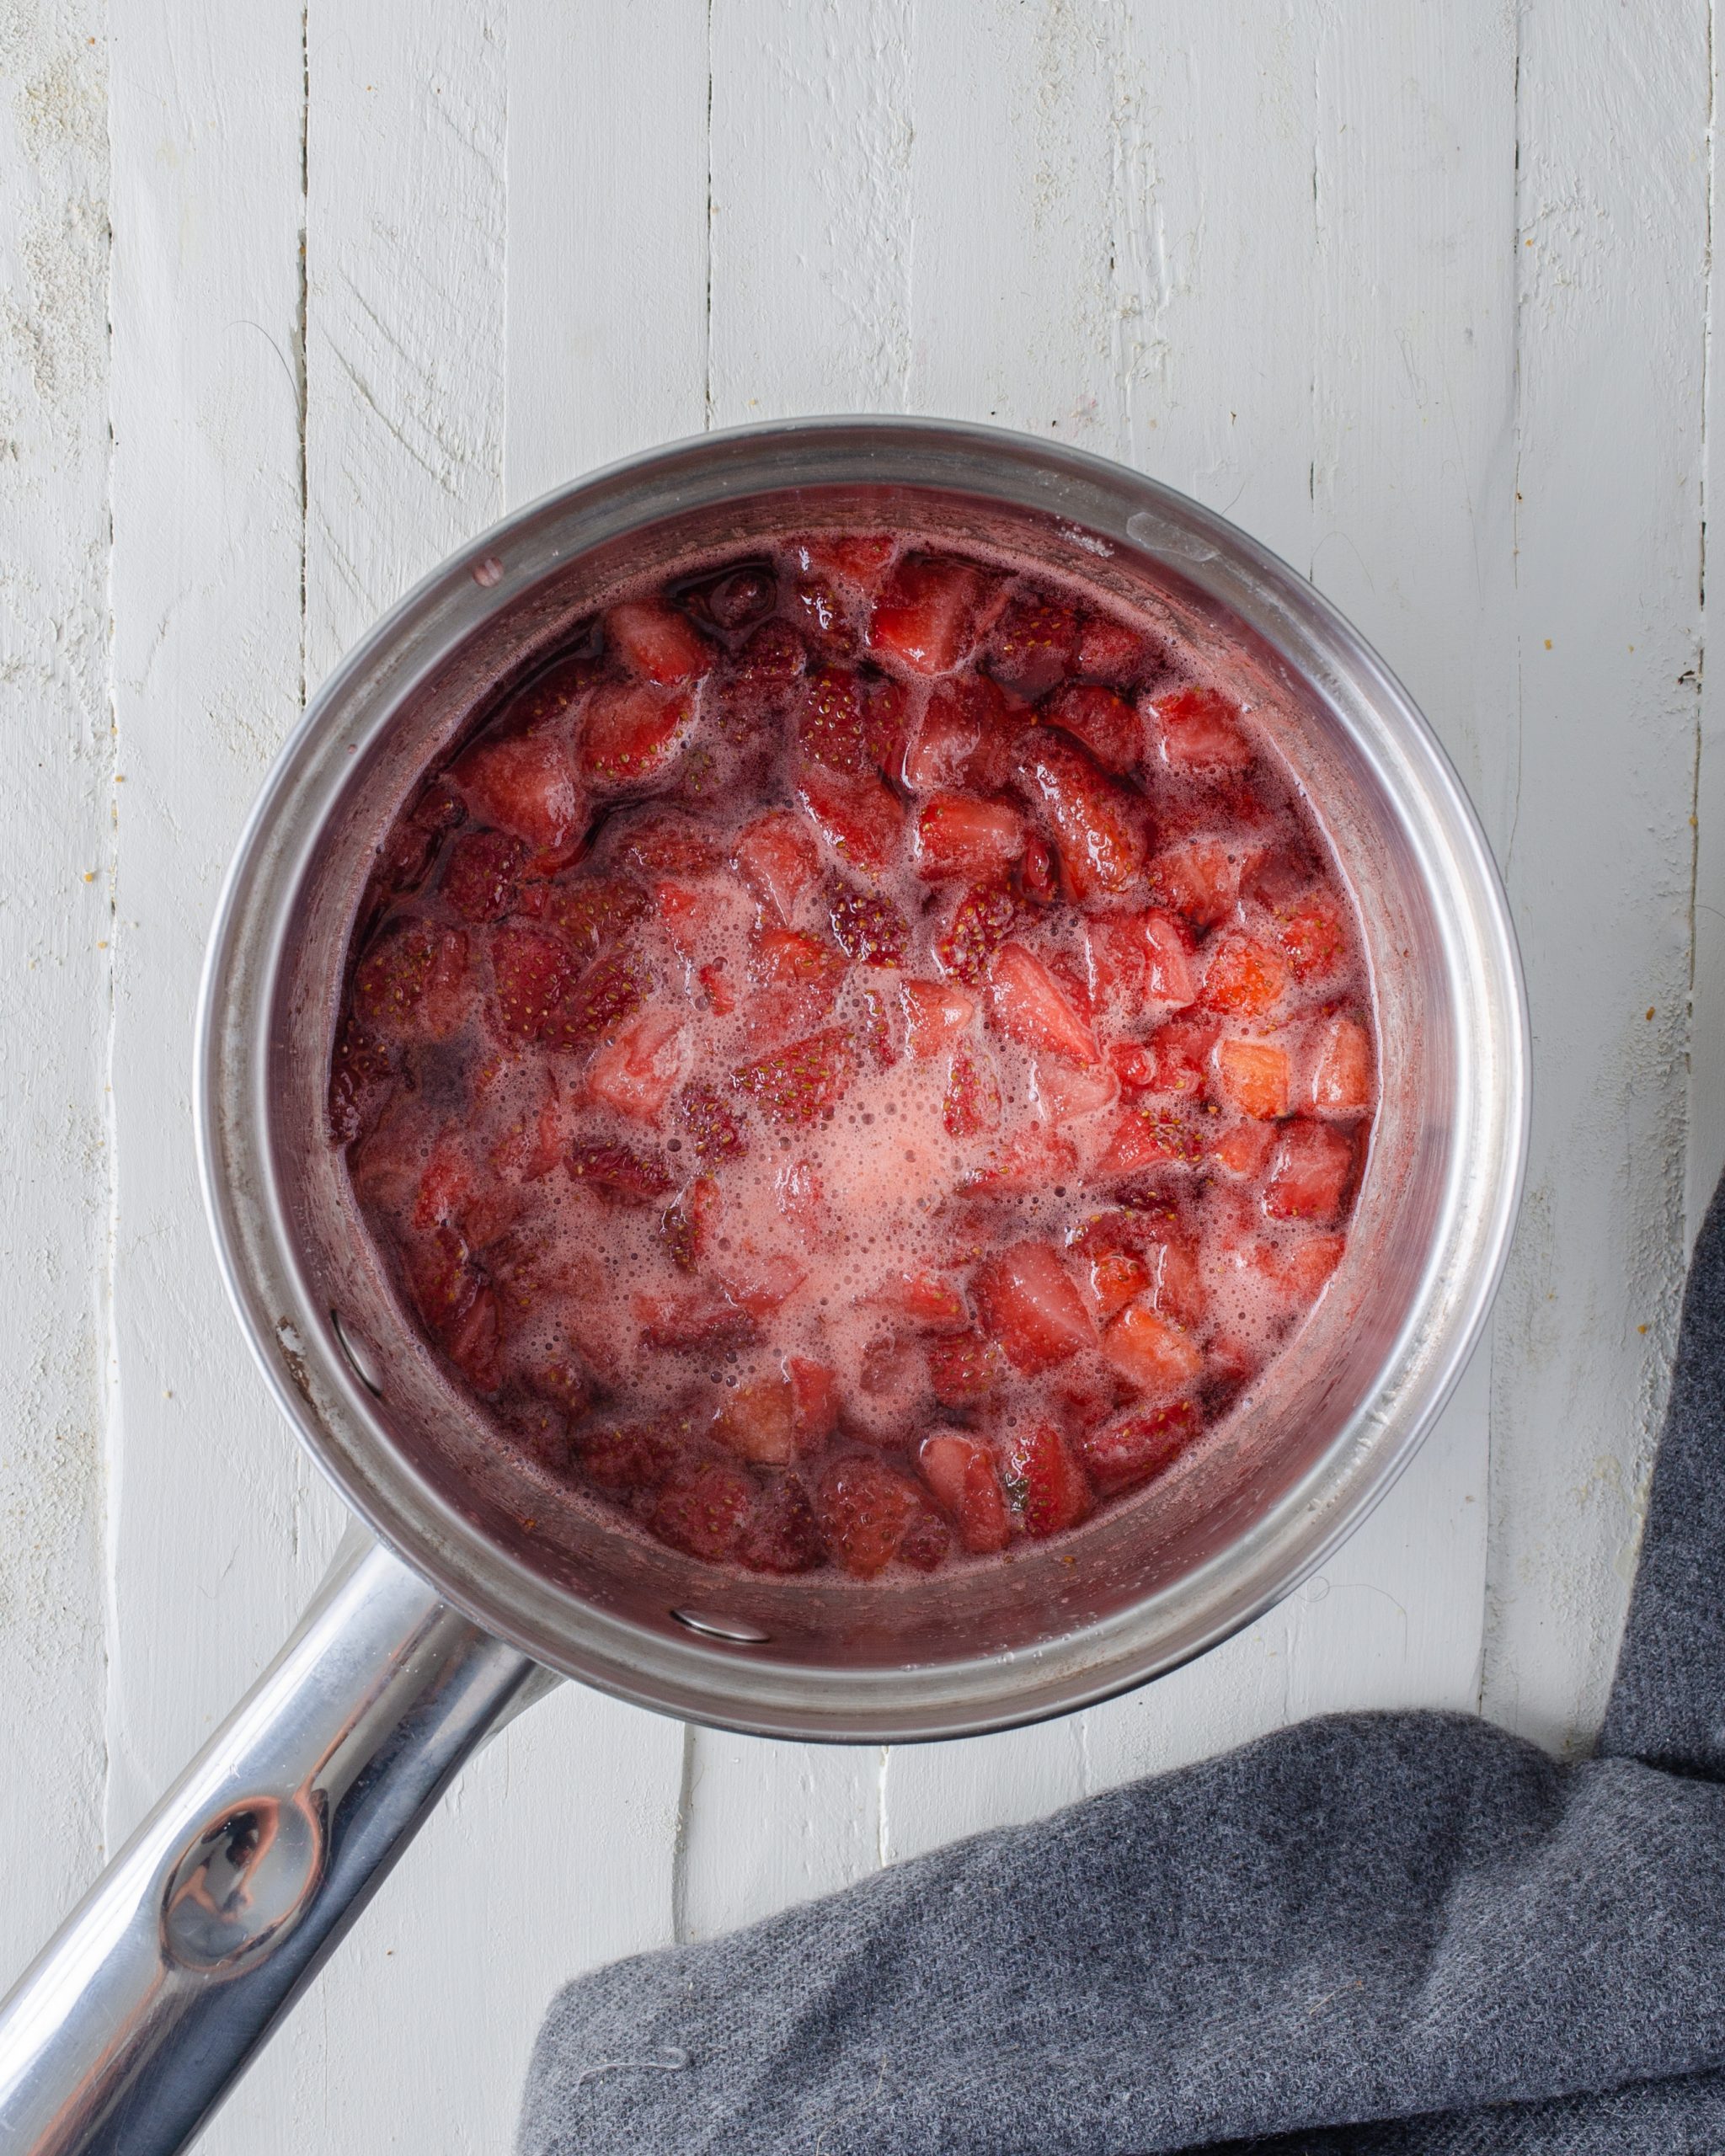 To a saucepan over medium heat, add the cornstarch mixture, granulated sugar, and cherries.